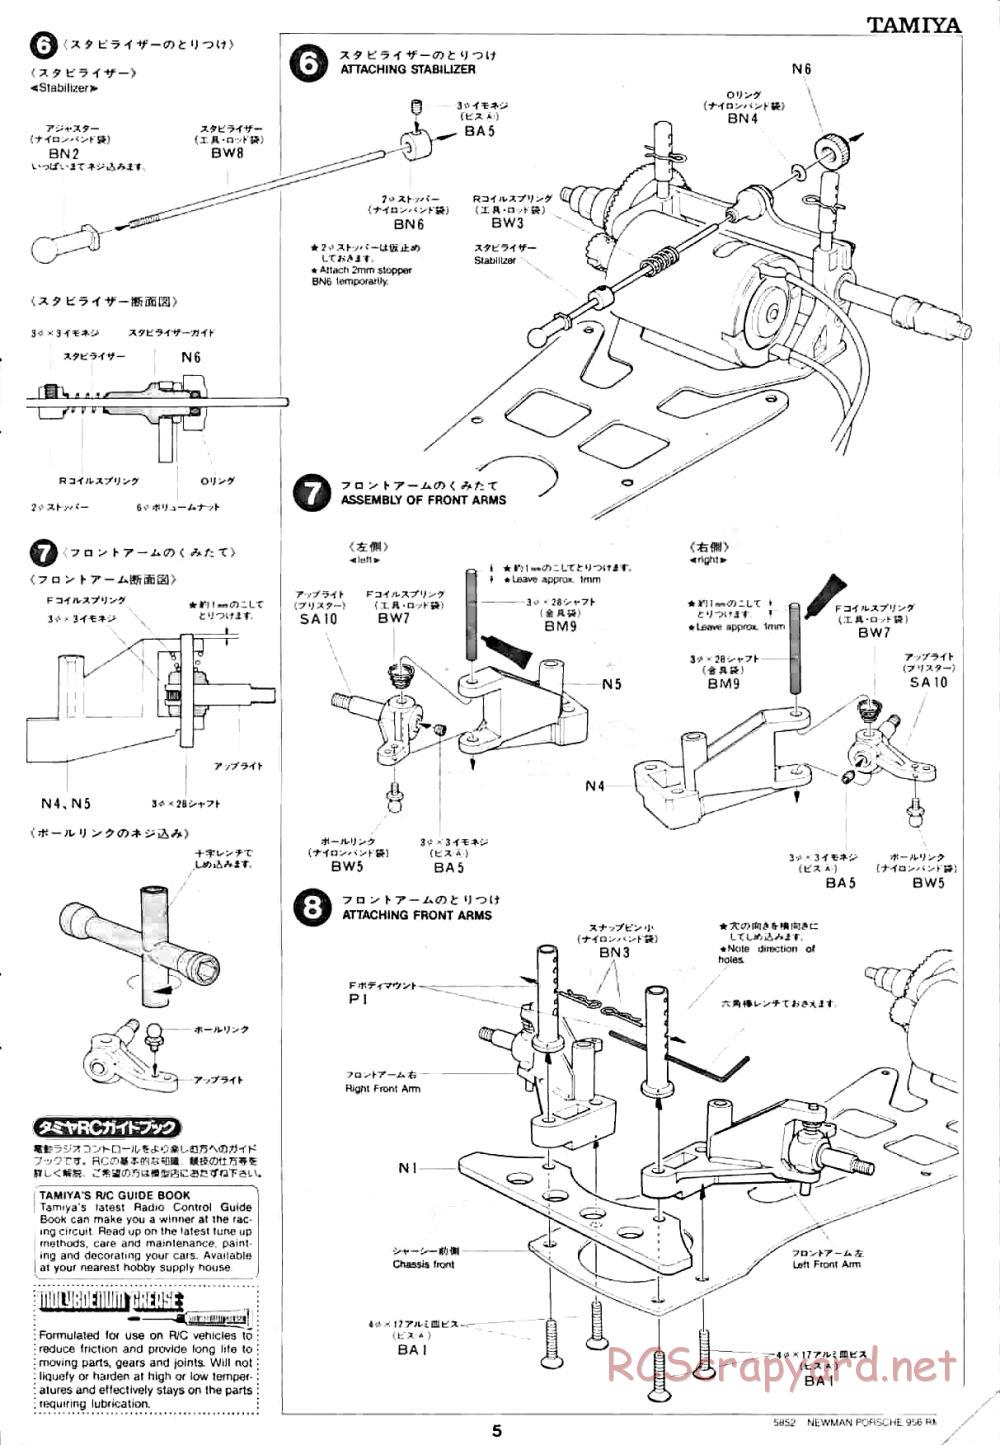 Tamiya - Newman Prsch 956 - RM MK.7 - 58052 - Manual - Page 5